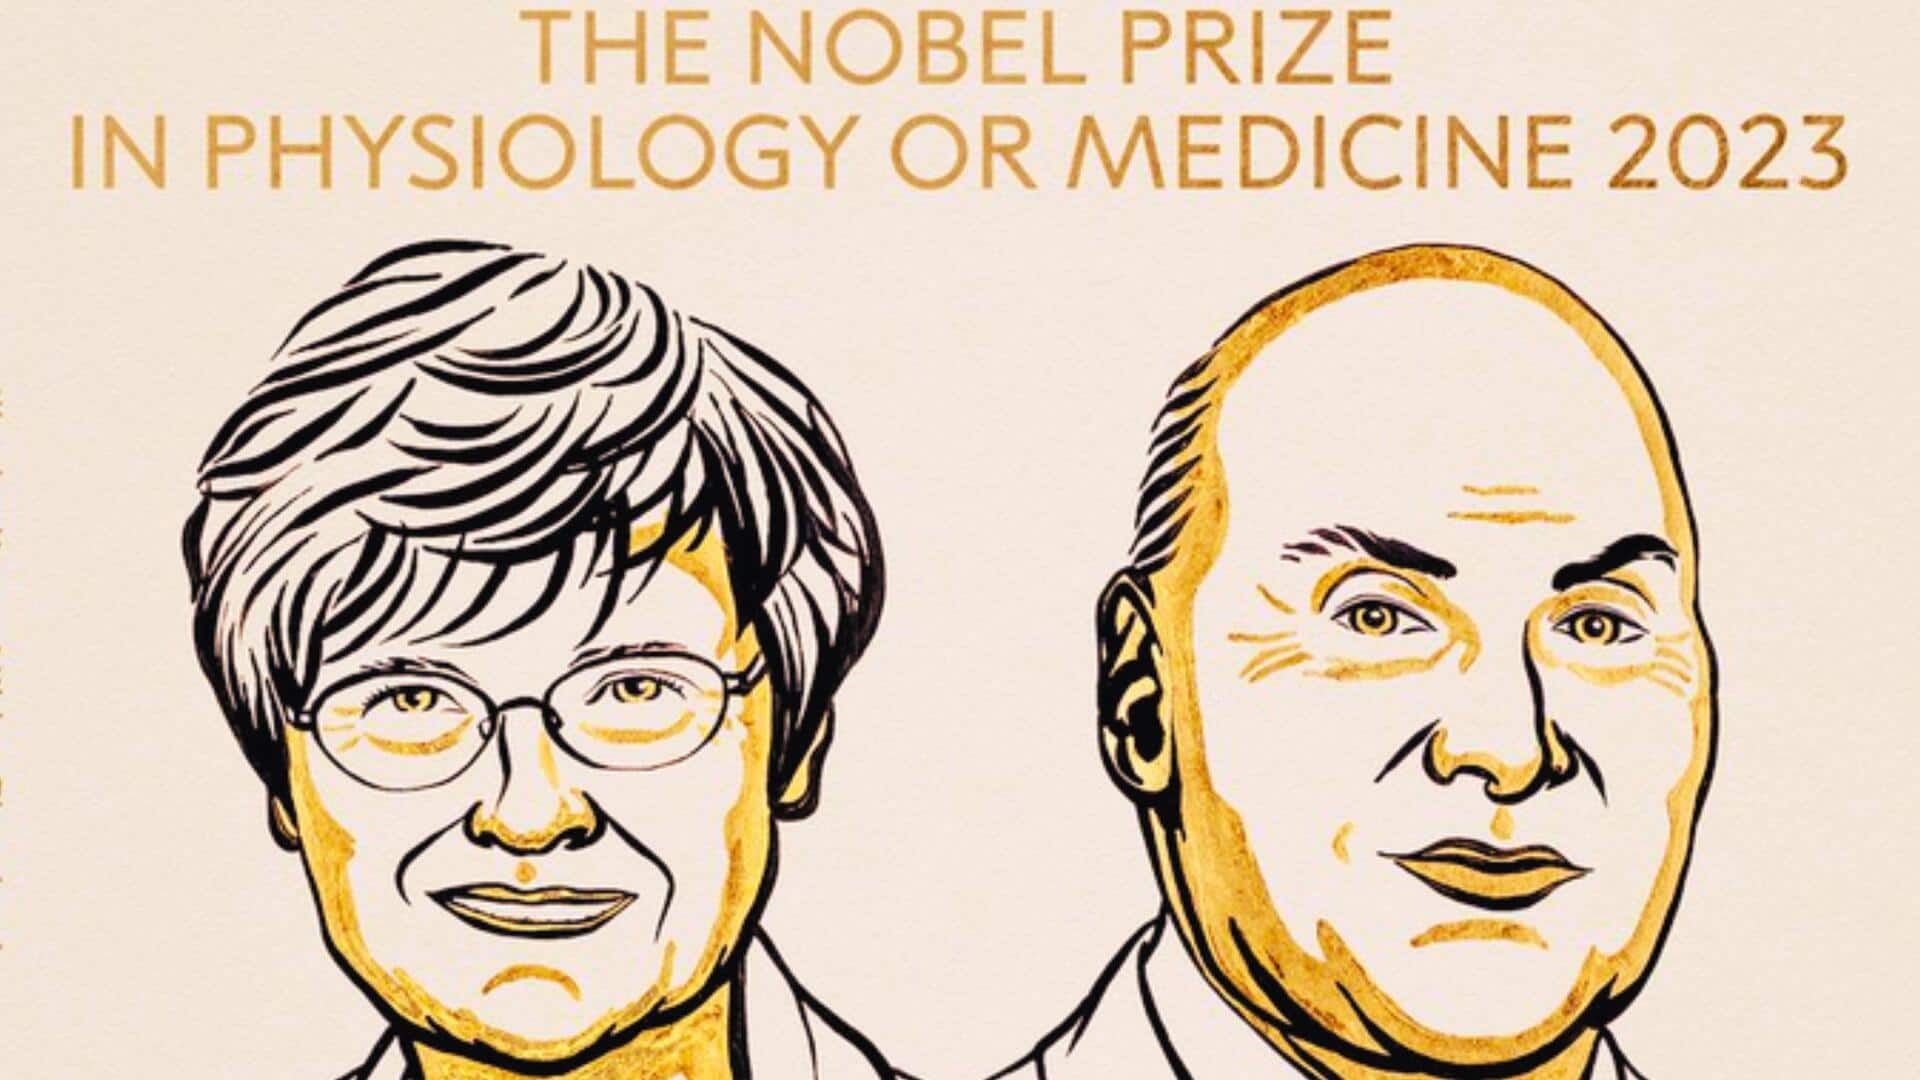  Nobel Prize 2023: మెడిసిన్‌లో కాటలిన్, వీస్‌మాన్‌కు నోబెల్.. కోవిడ్ వ్యాక్సిన్ల తయారీలో కీలక పాత్ర 